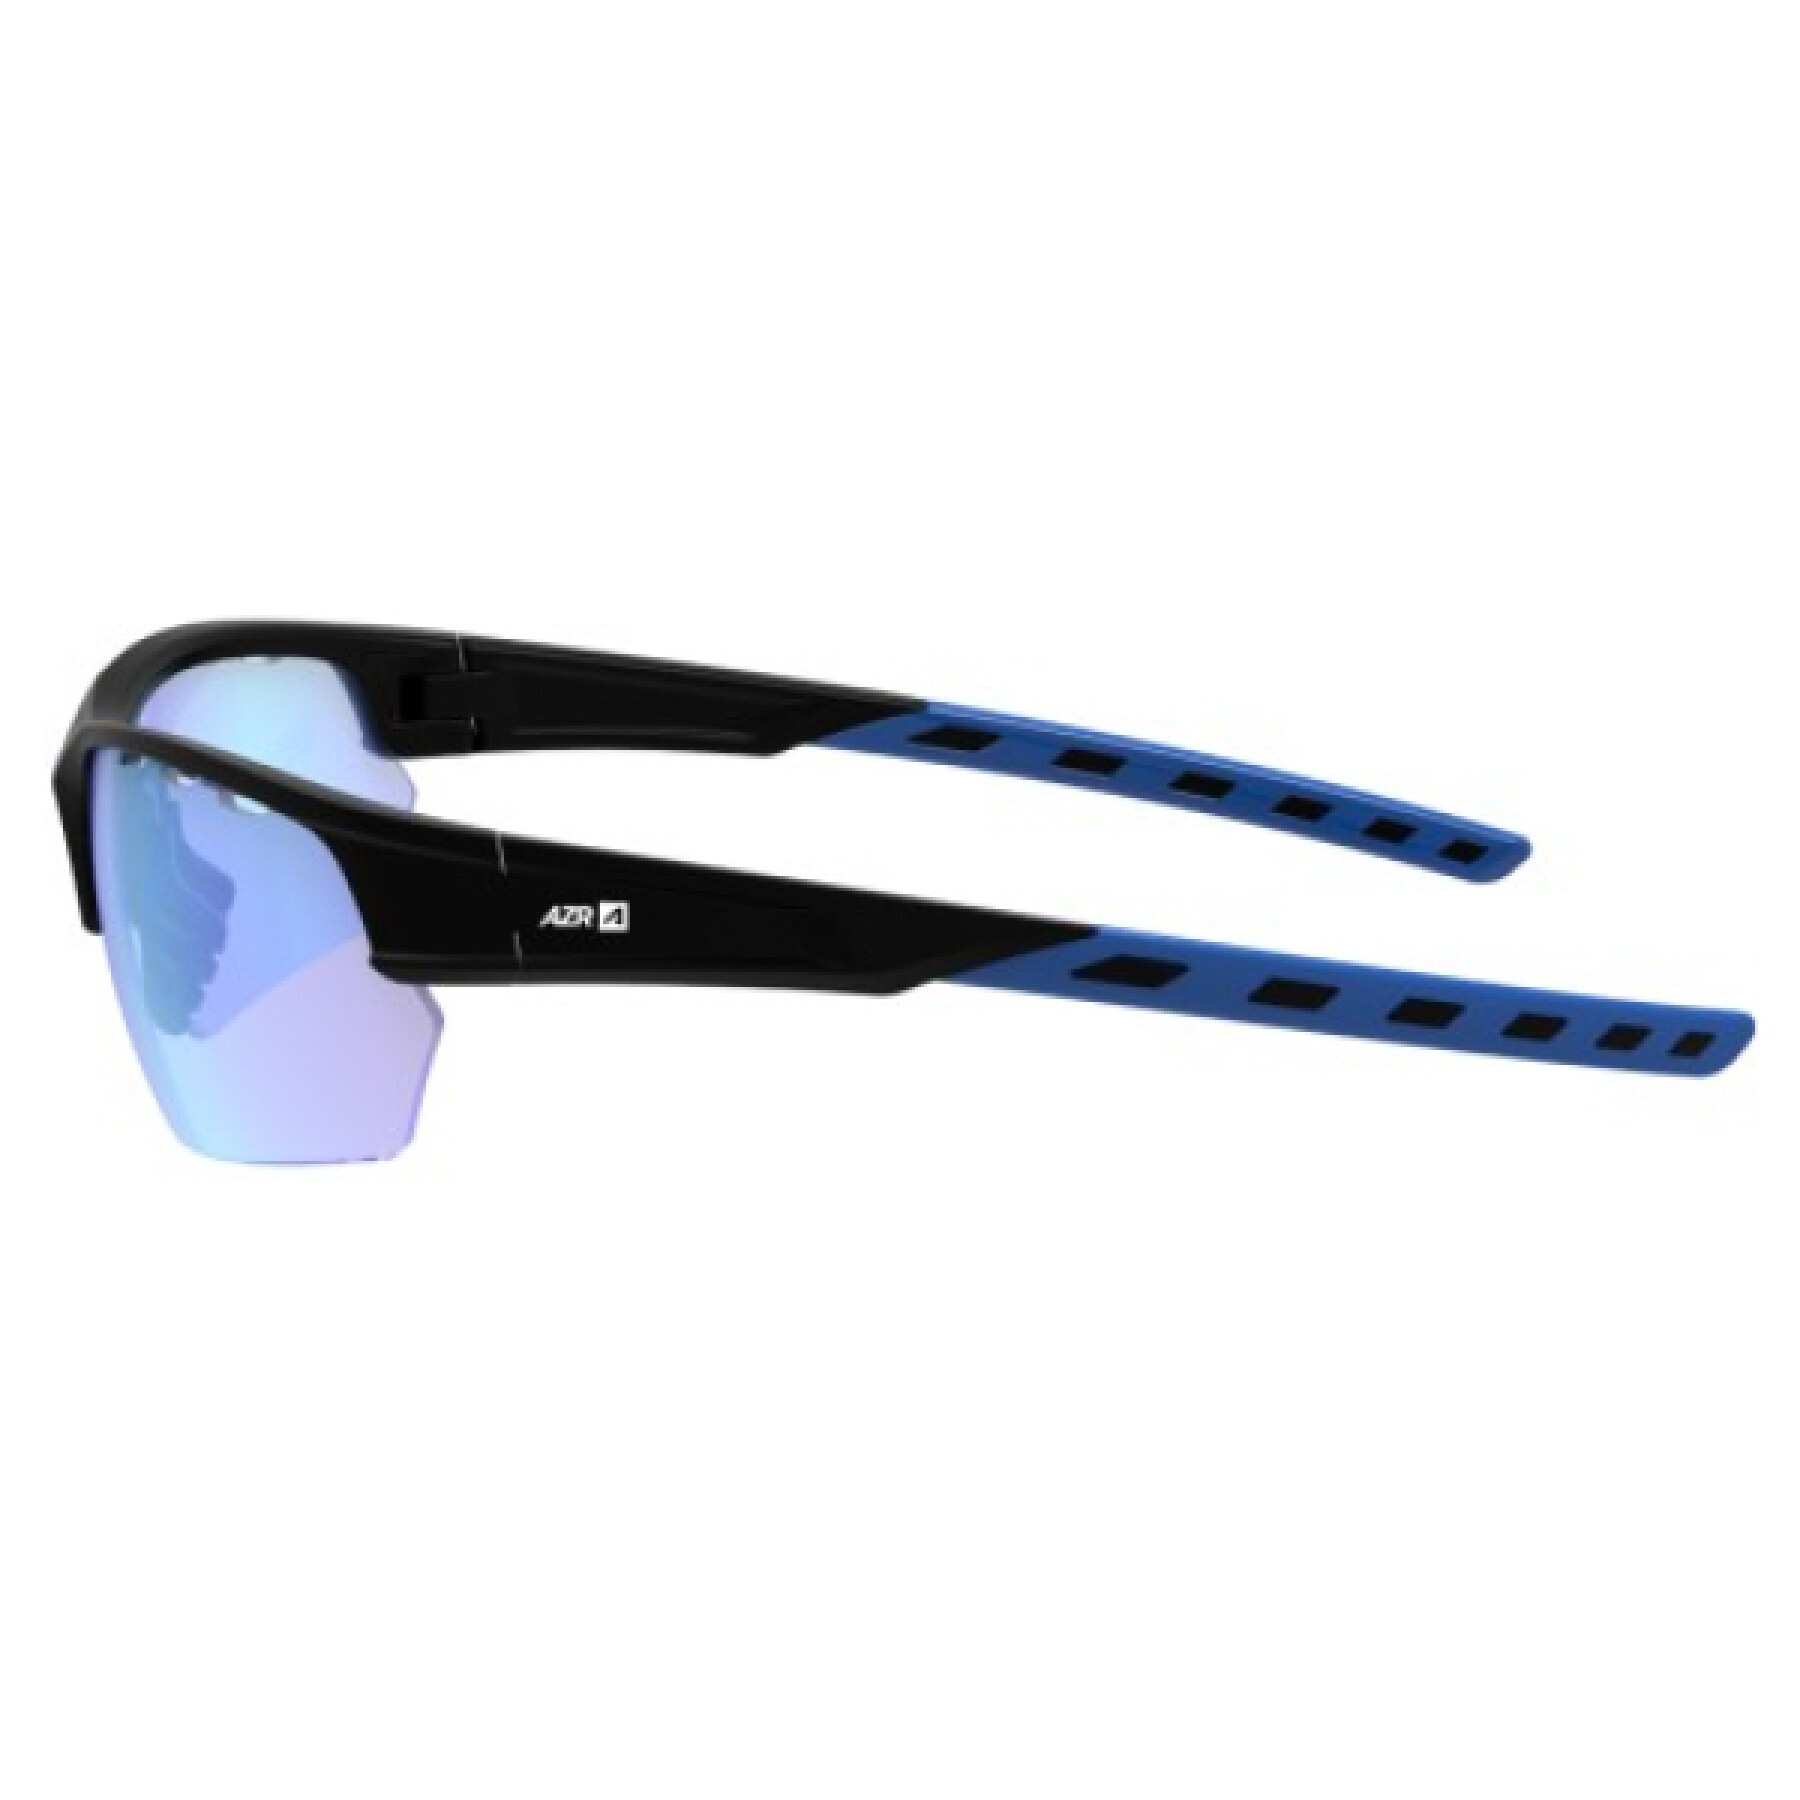 Óculos de sol AZR Pro Kromic Izoard